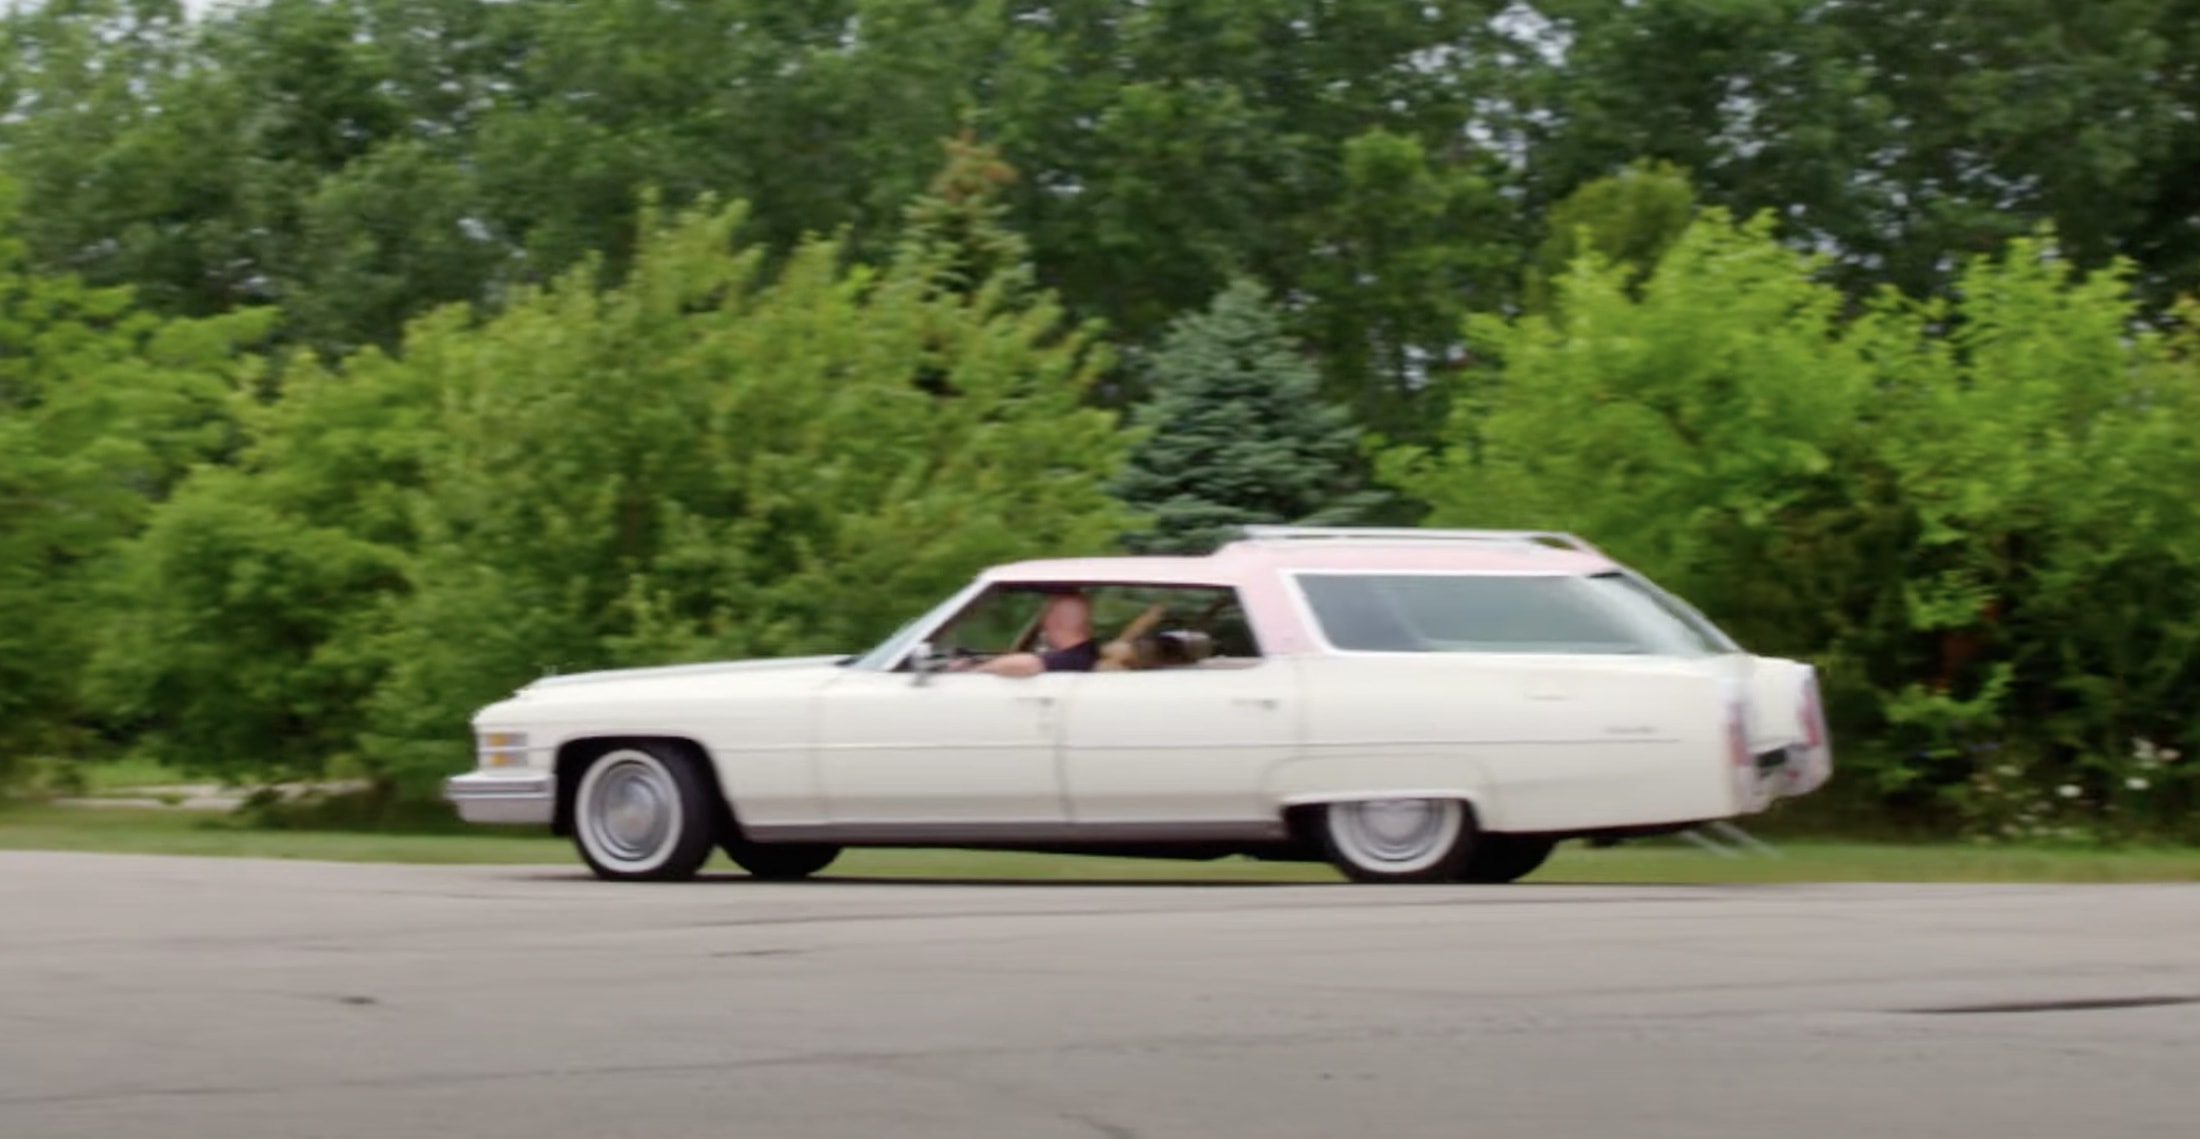 Elvis's Iconic Cadillac